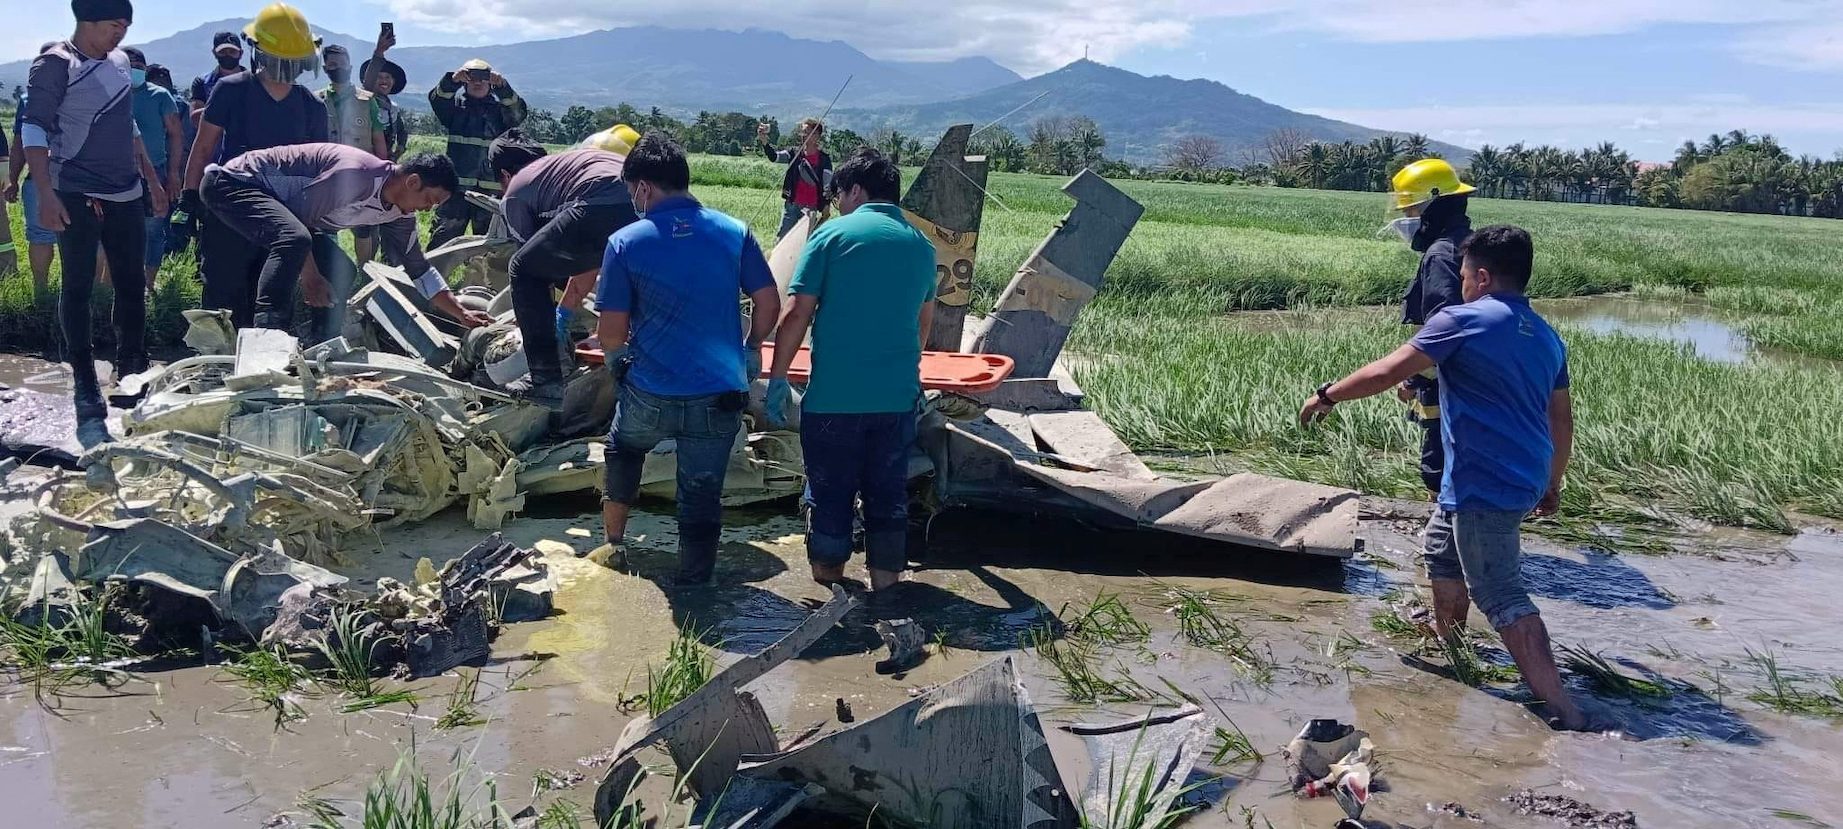 2 killed in Bataan military plane crash